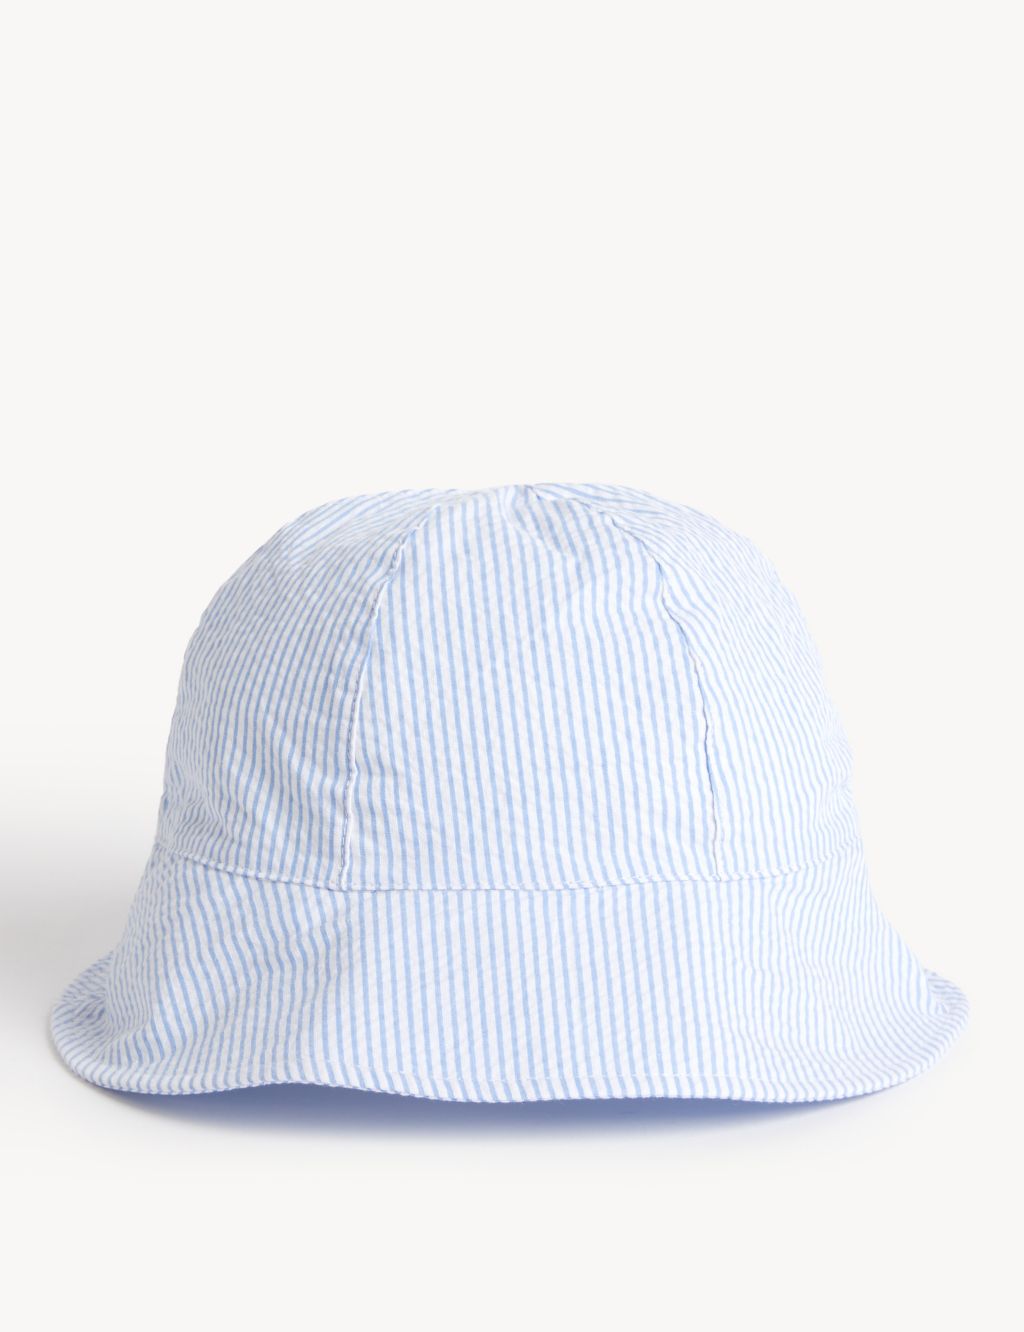 Kids' Pure Cotton Striped Sun Hat (0-6 Yrs) image 1